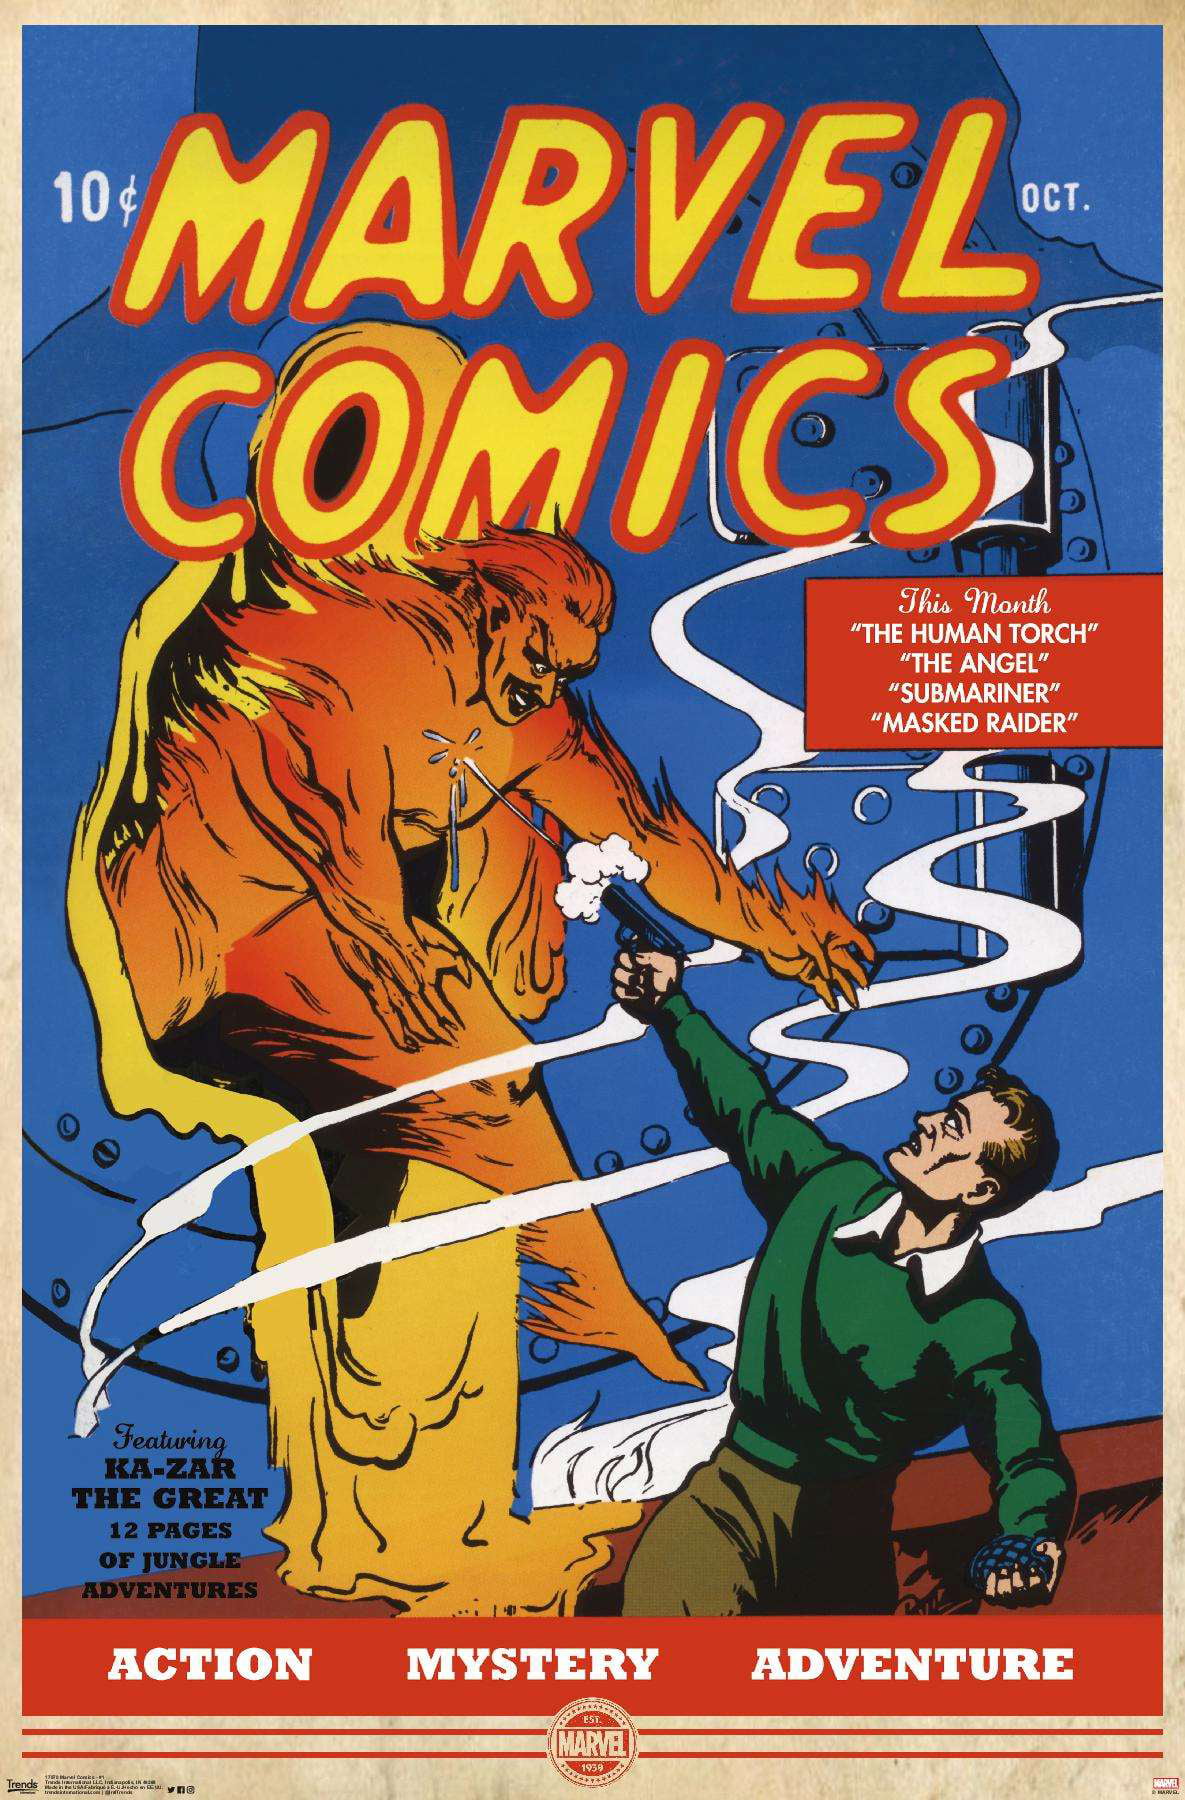 HUMAN TORCH ~ OCT COVER 16x20 COMIC ART PRINT Marvel Comic Book Submariner 